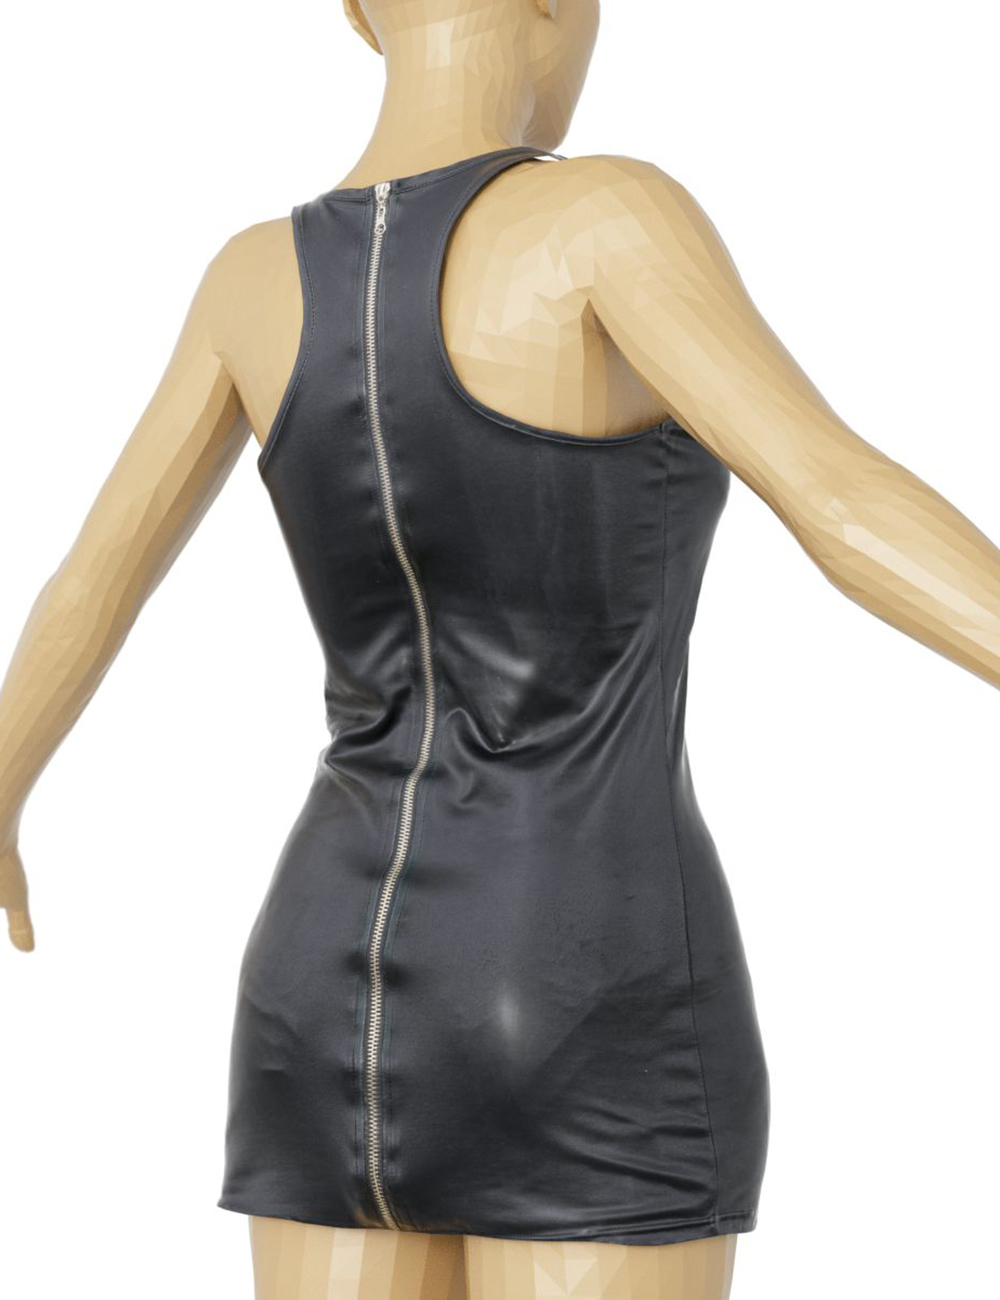 OBJ - Leather Zipper Dress by: Polygonal Miniatures, 3D Models by Daz 3D